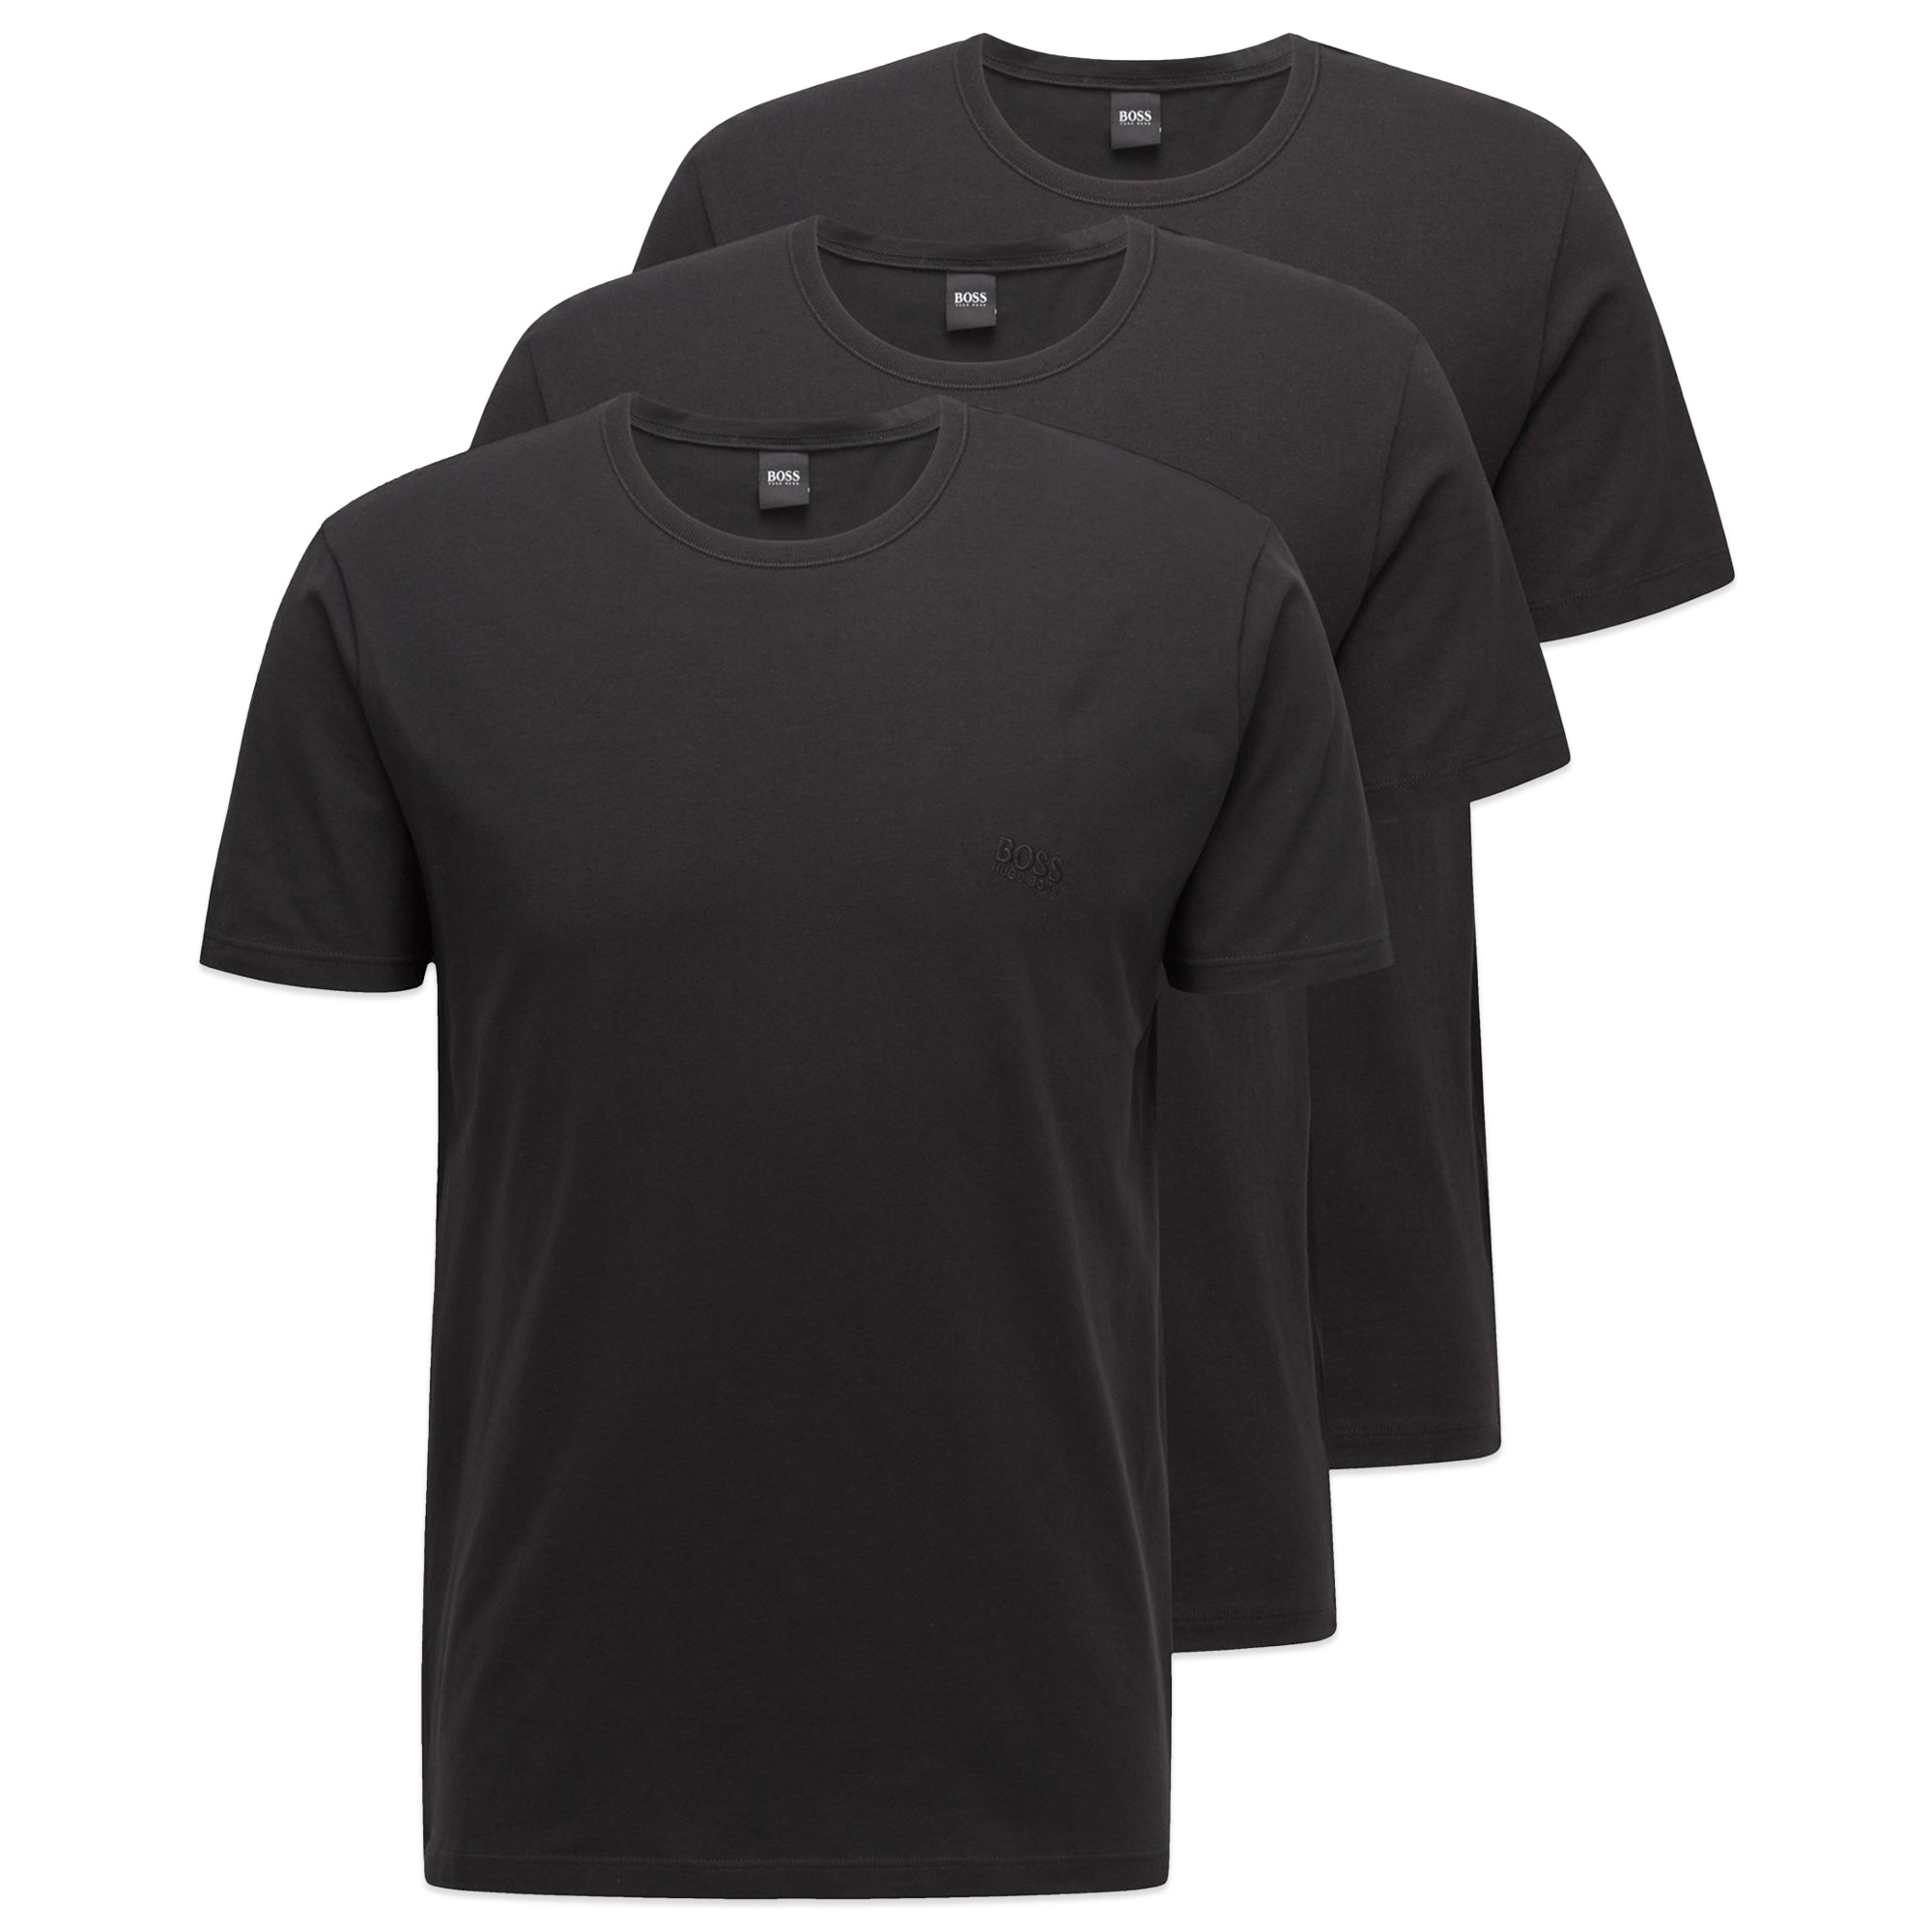 Boss 3 Pack Cotton T-Shirts - Black